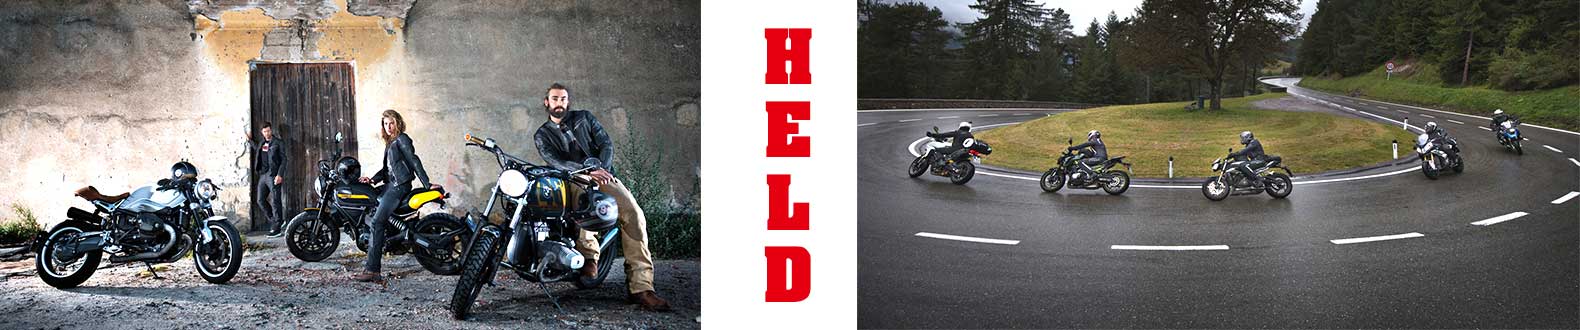 Held_Motorradbekleidung-2